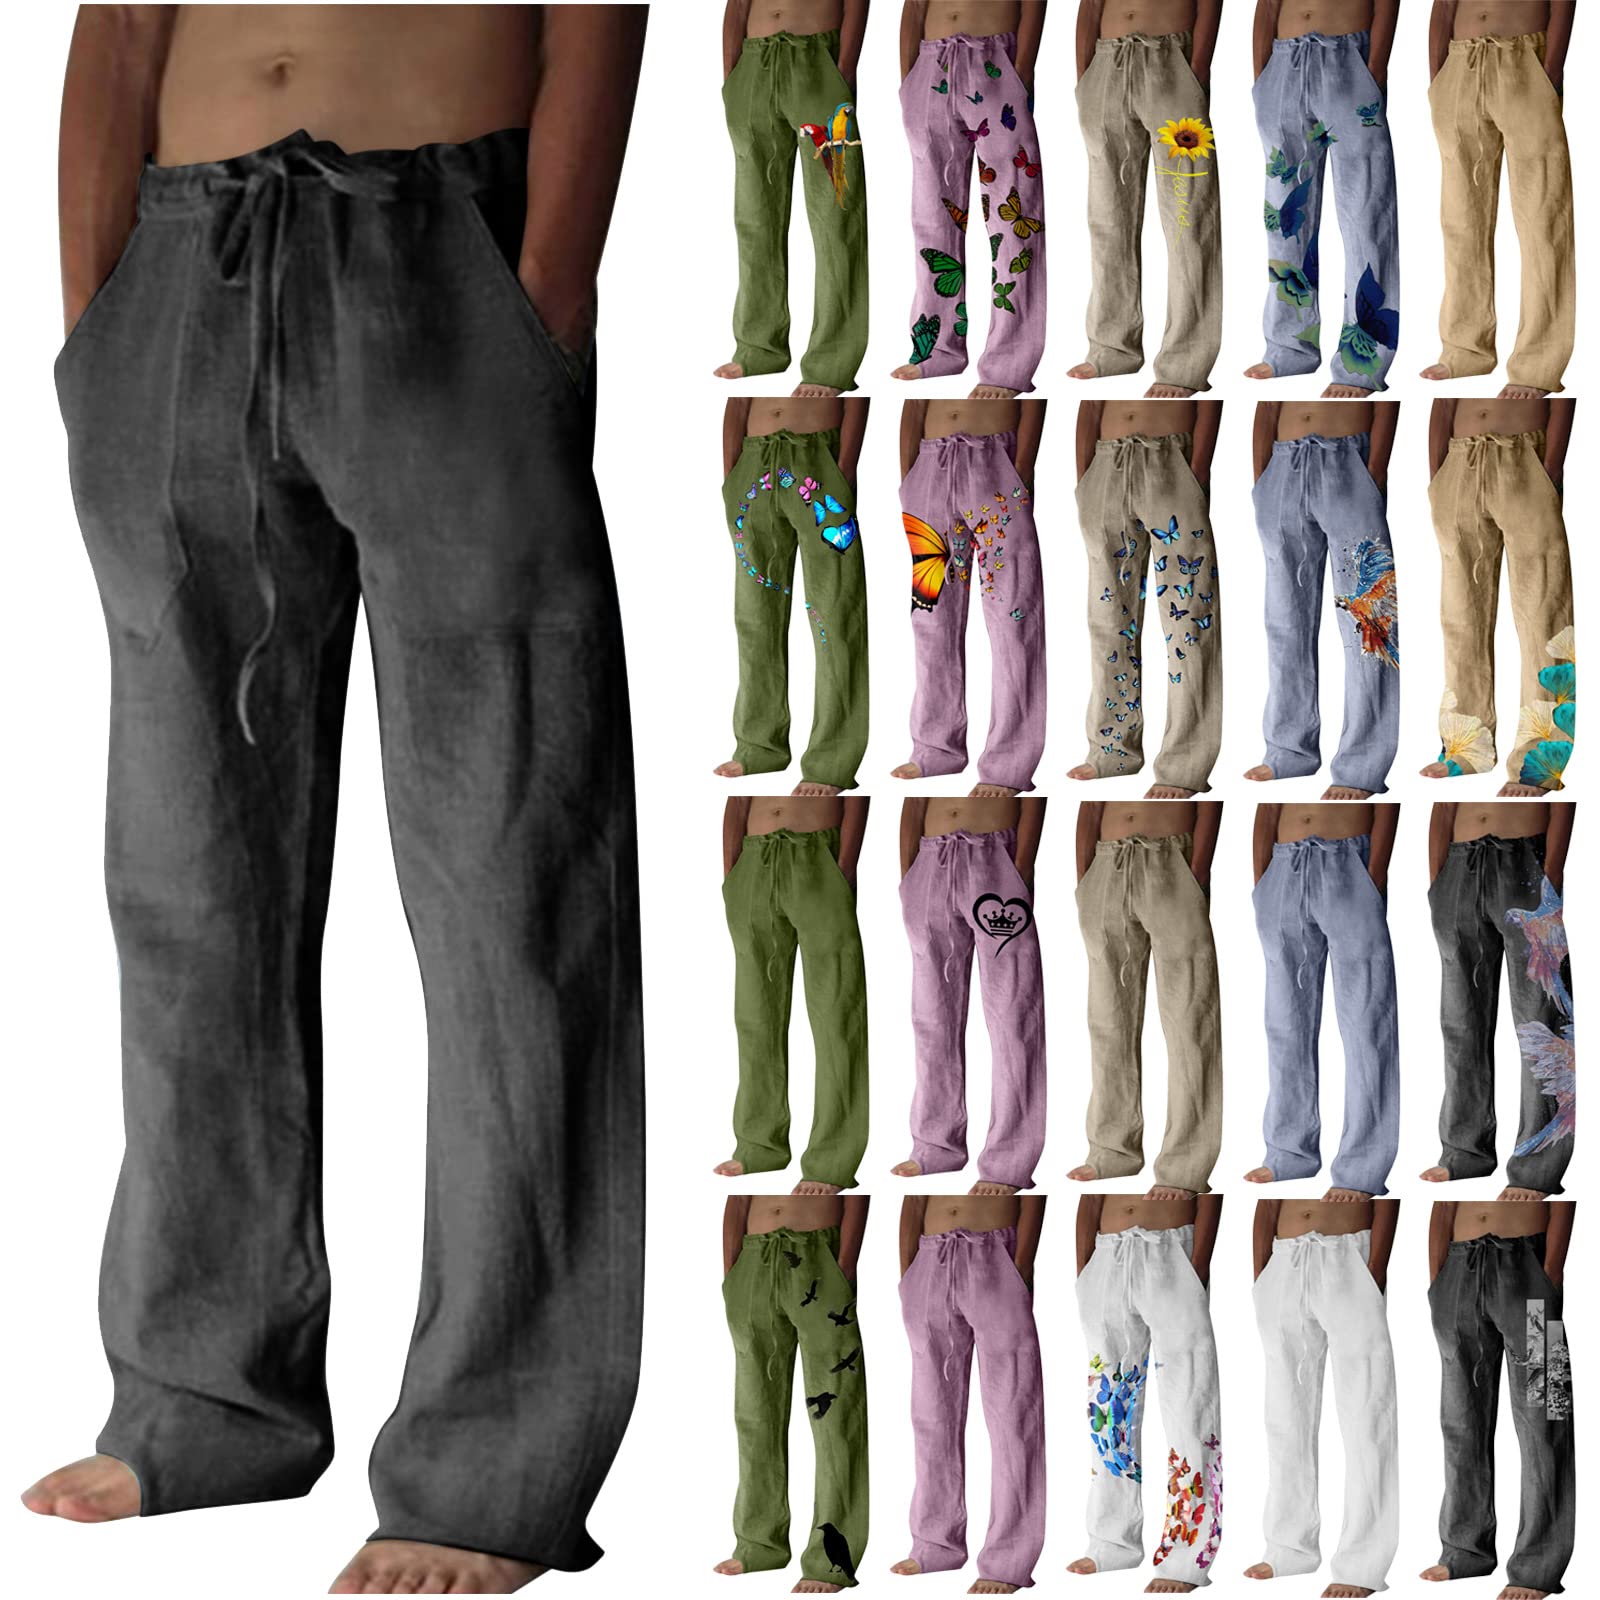 Guvpev Men's Casual Loose Pants Loose Fit Linen Comfortable Breathable Pants  - Dark Gray XL 